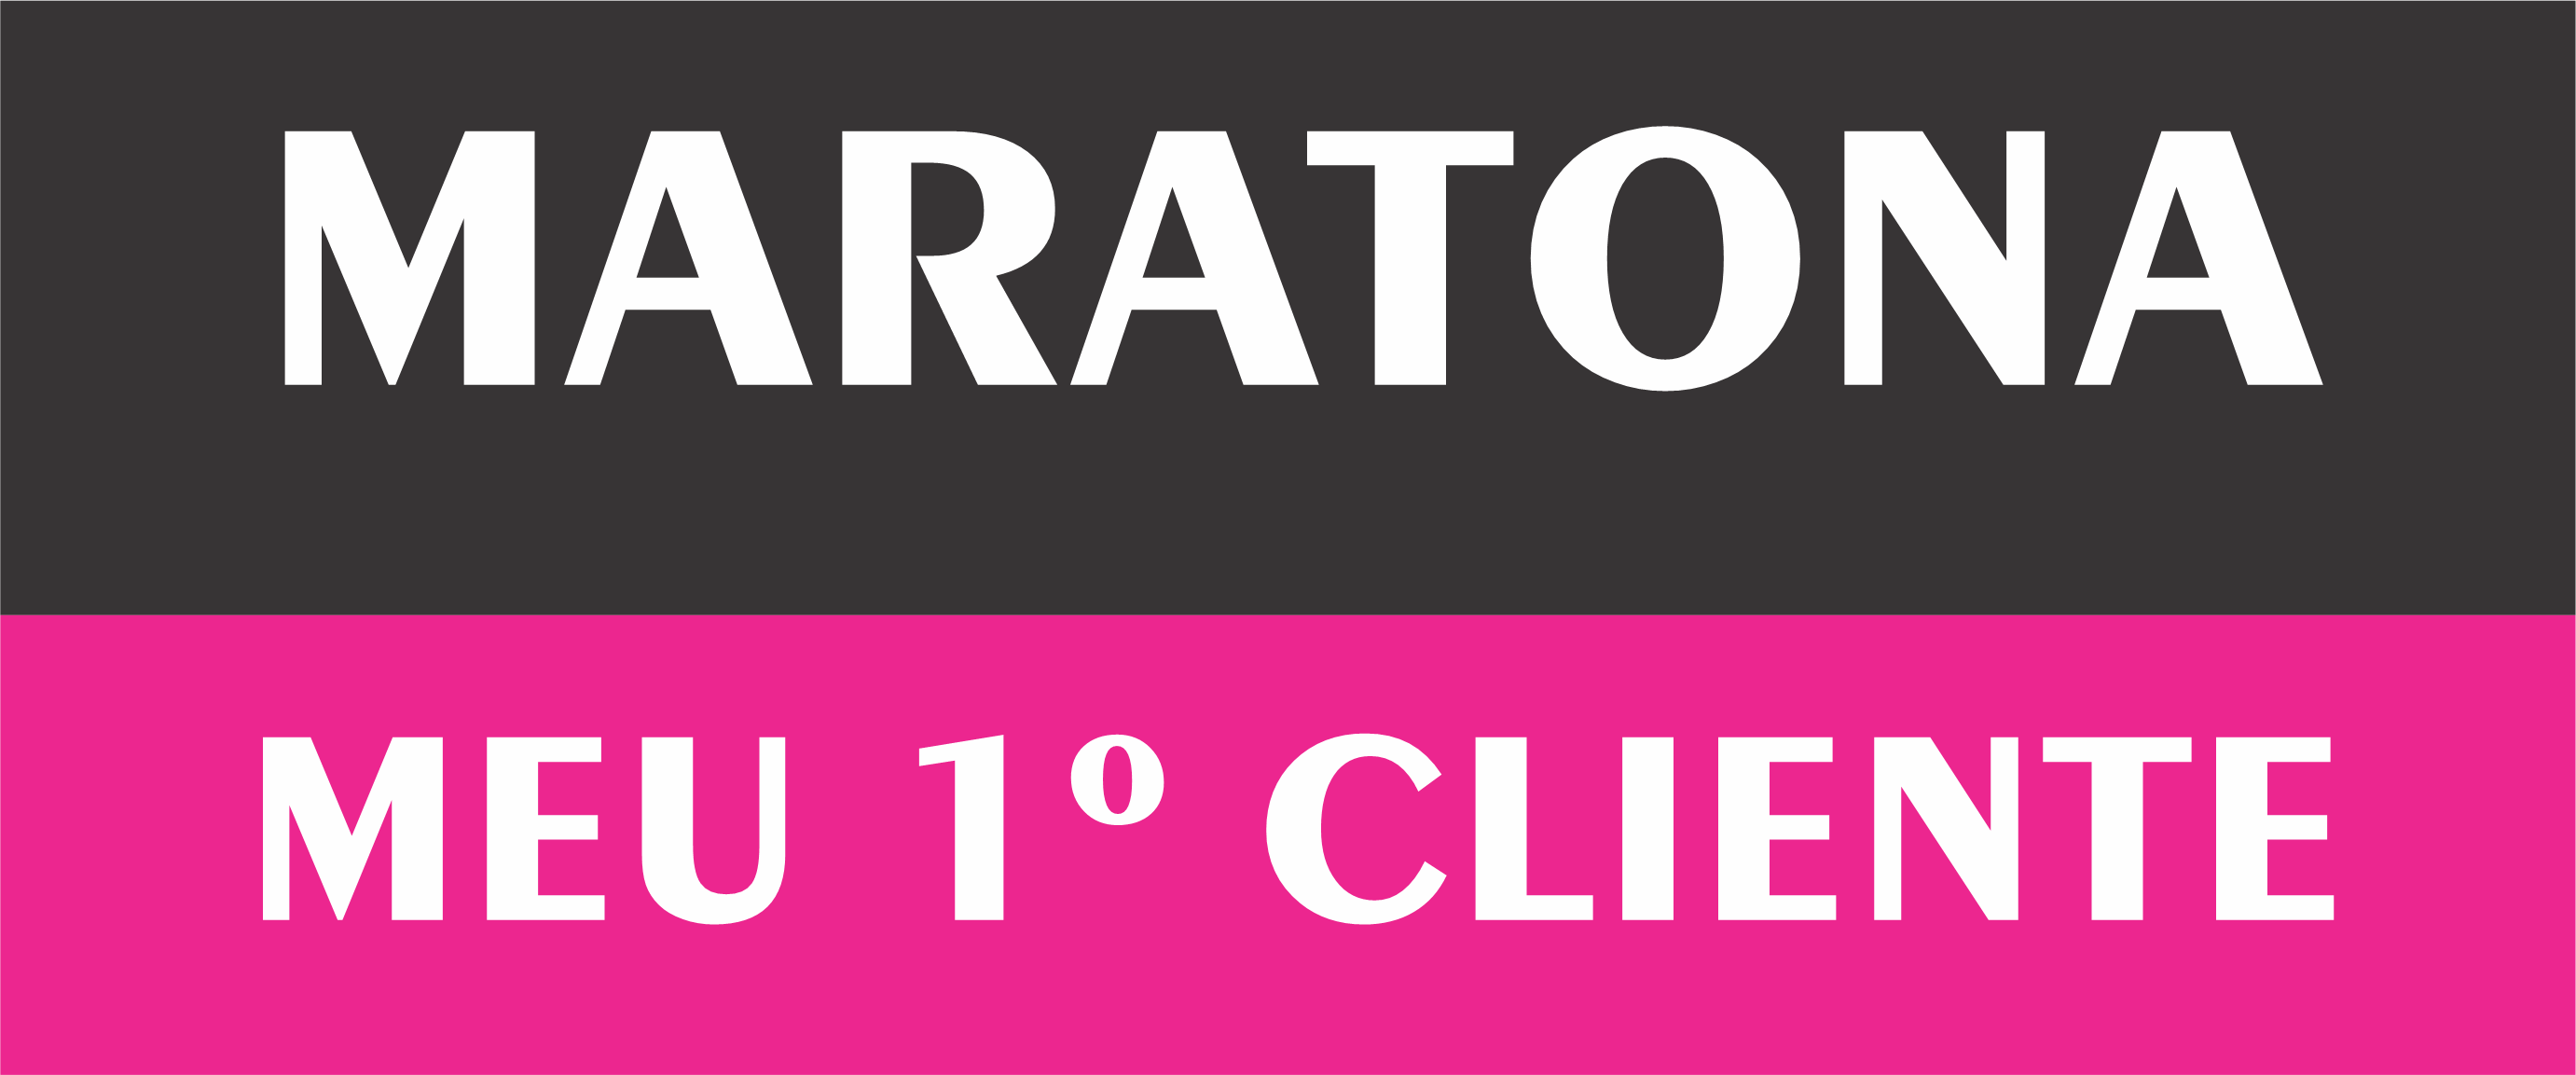 maratona3 - Maratona Meu 1 Cliente Secretariado Remoto